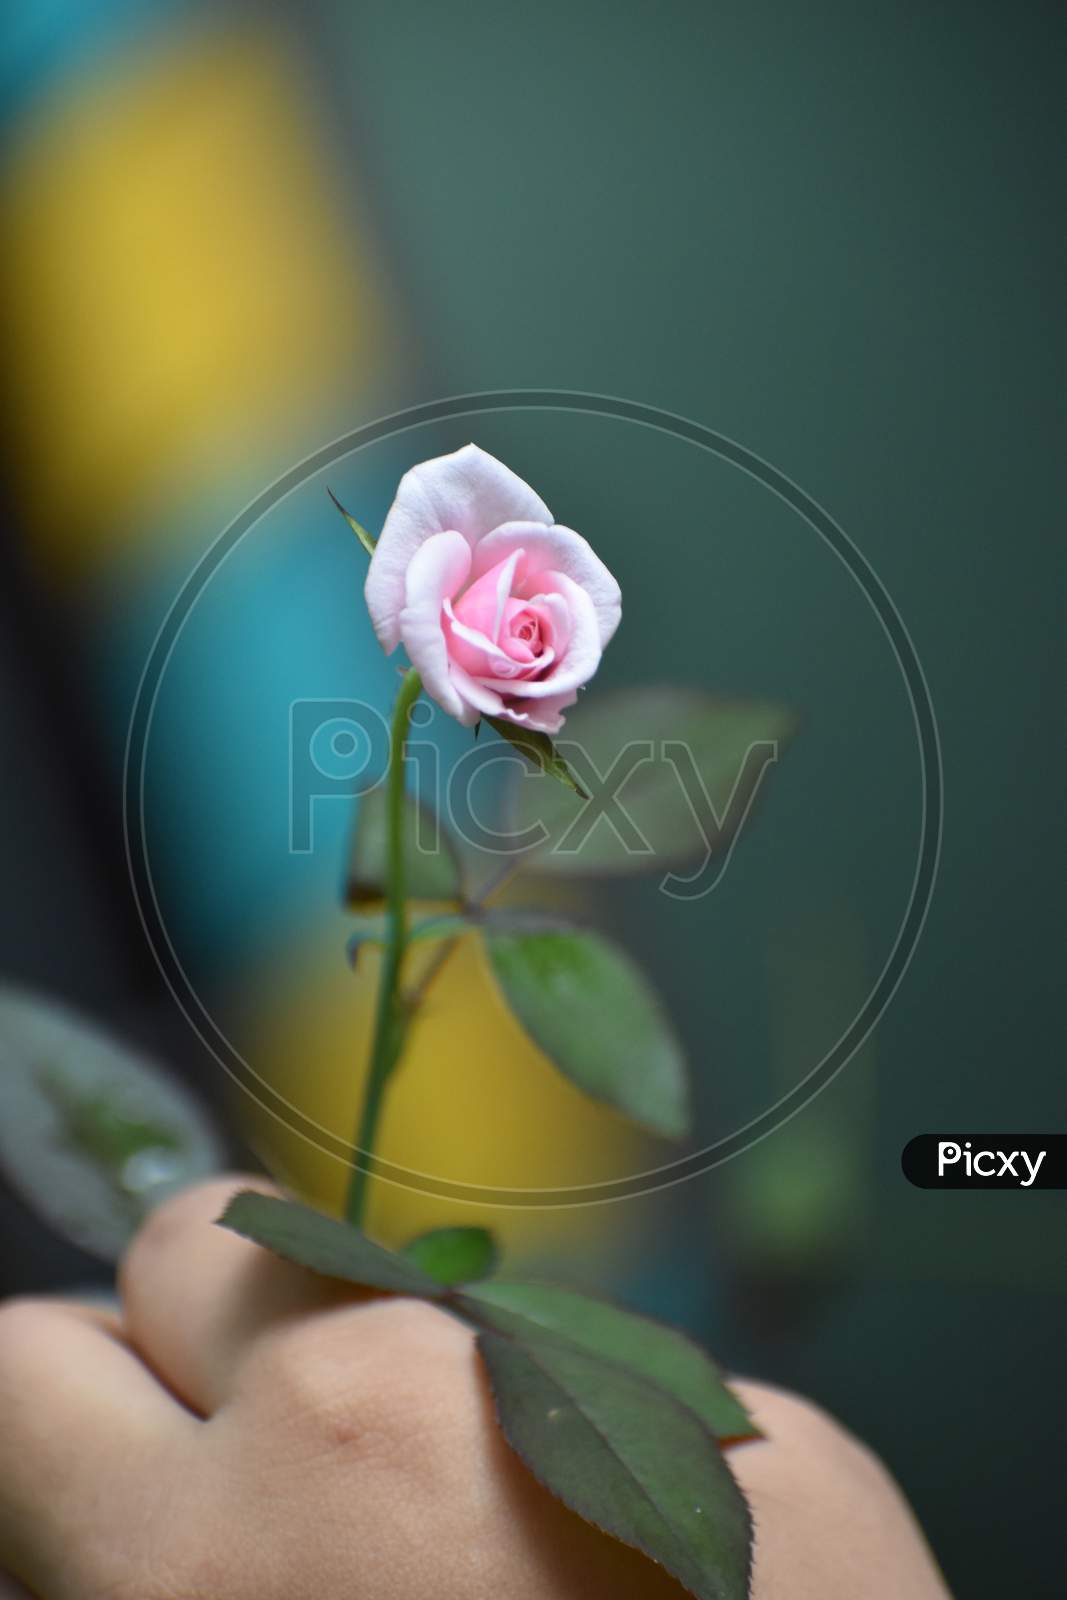 Rose. Bast flowers in world